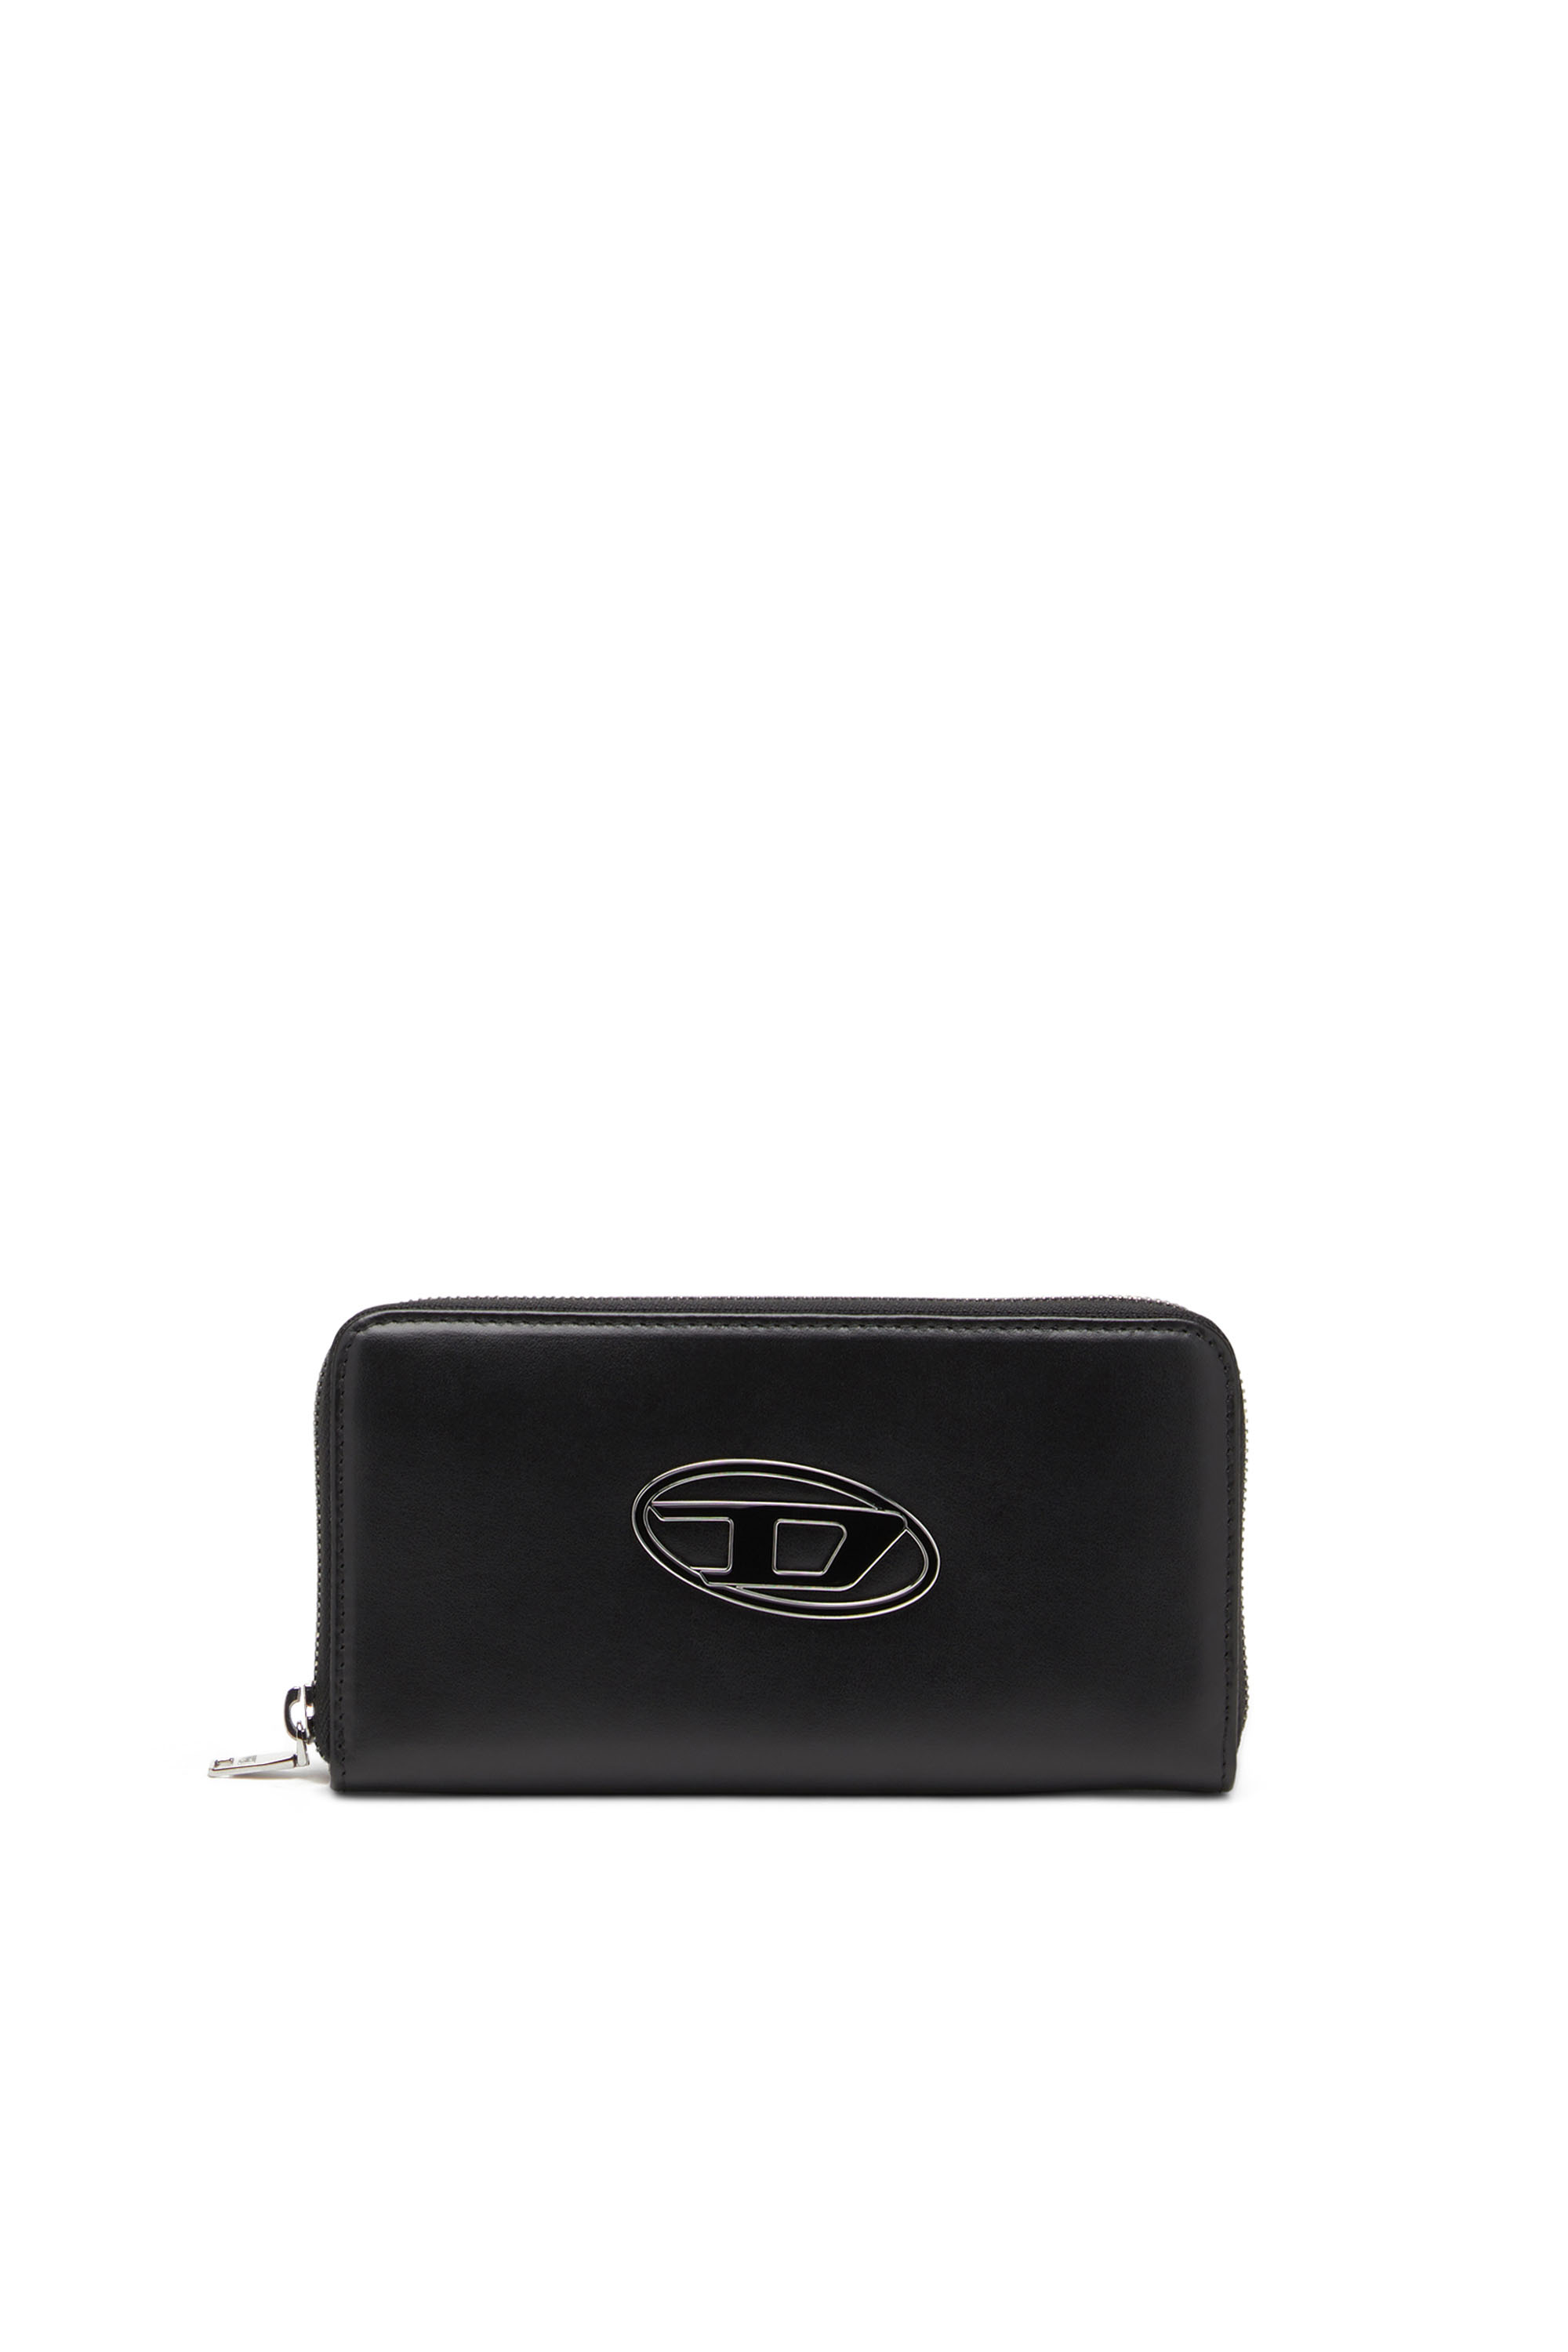 Diesel - Zip-around wallet in nappa leather - Zip-Round Wallets - Woman - Black